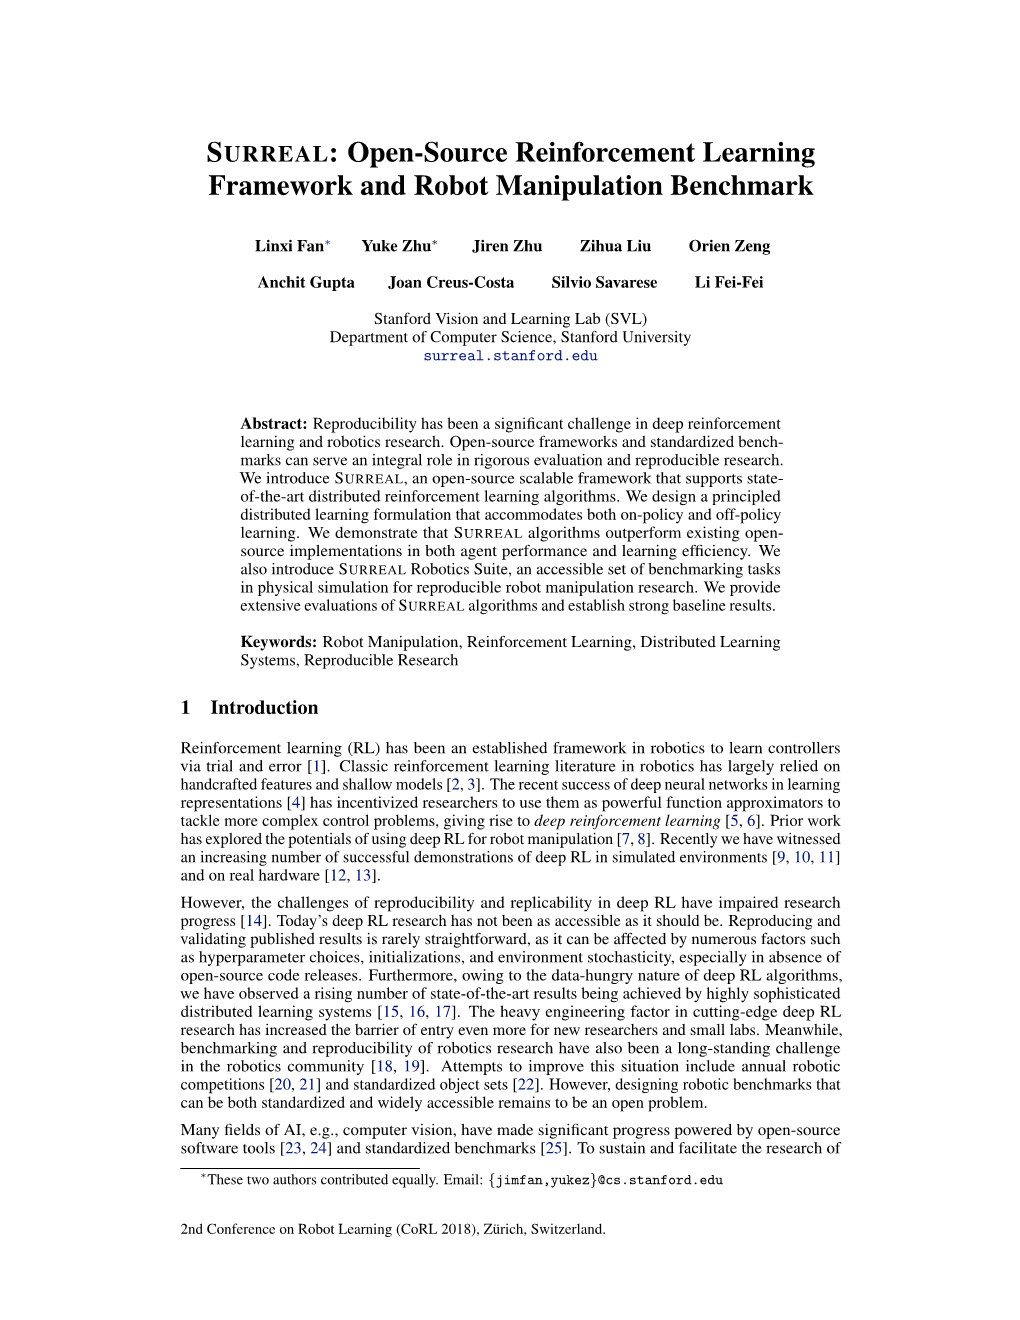 Open-Source Reinforcement Learning Framework and Robot Manipulation Benchmark